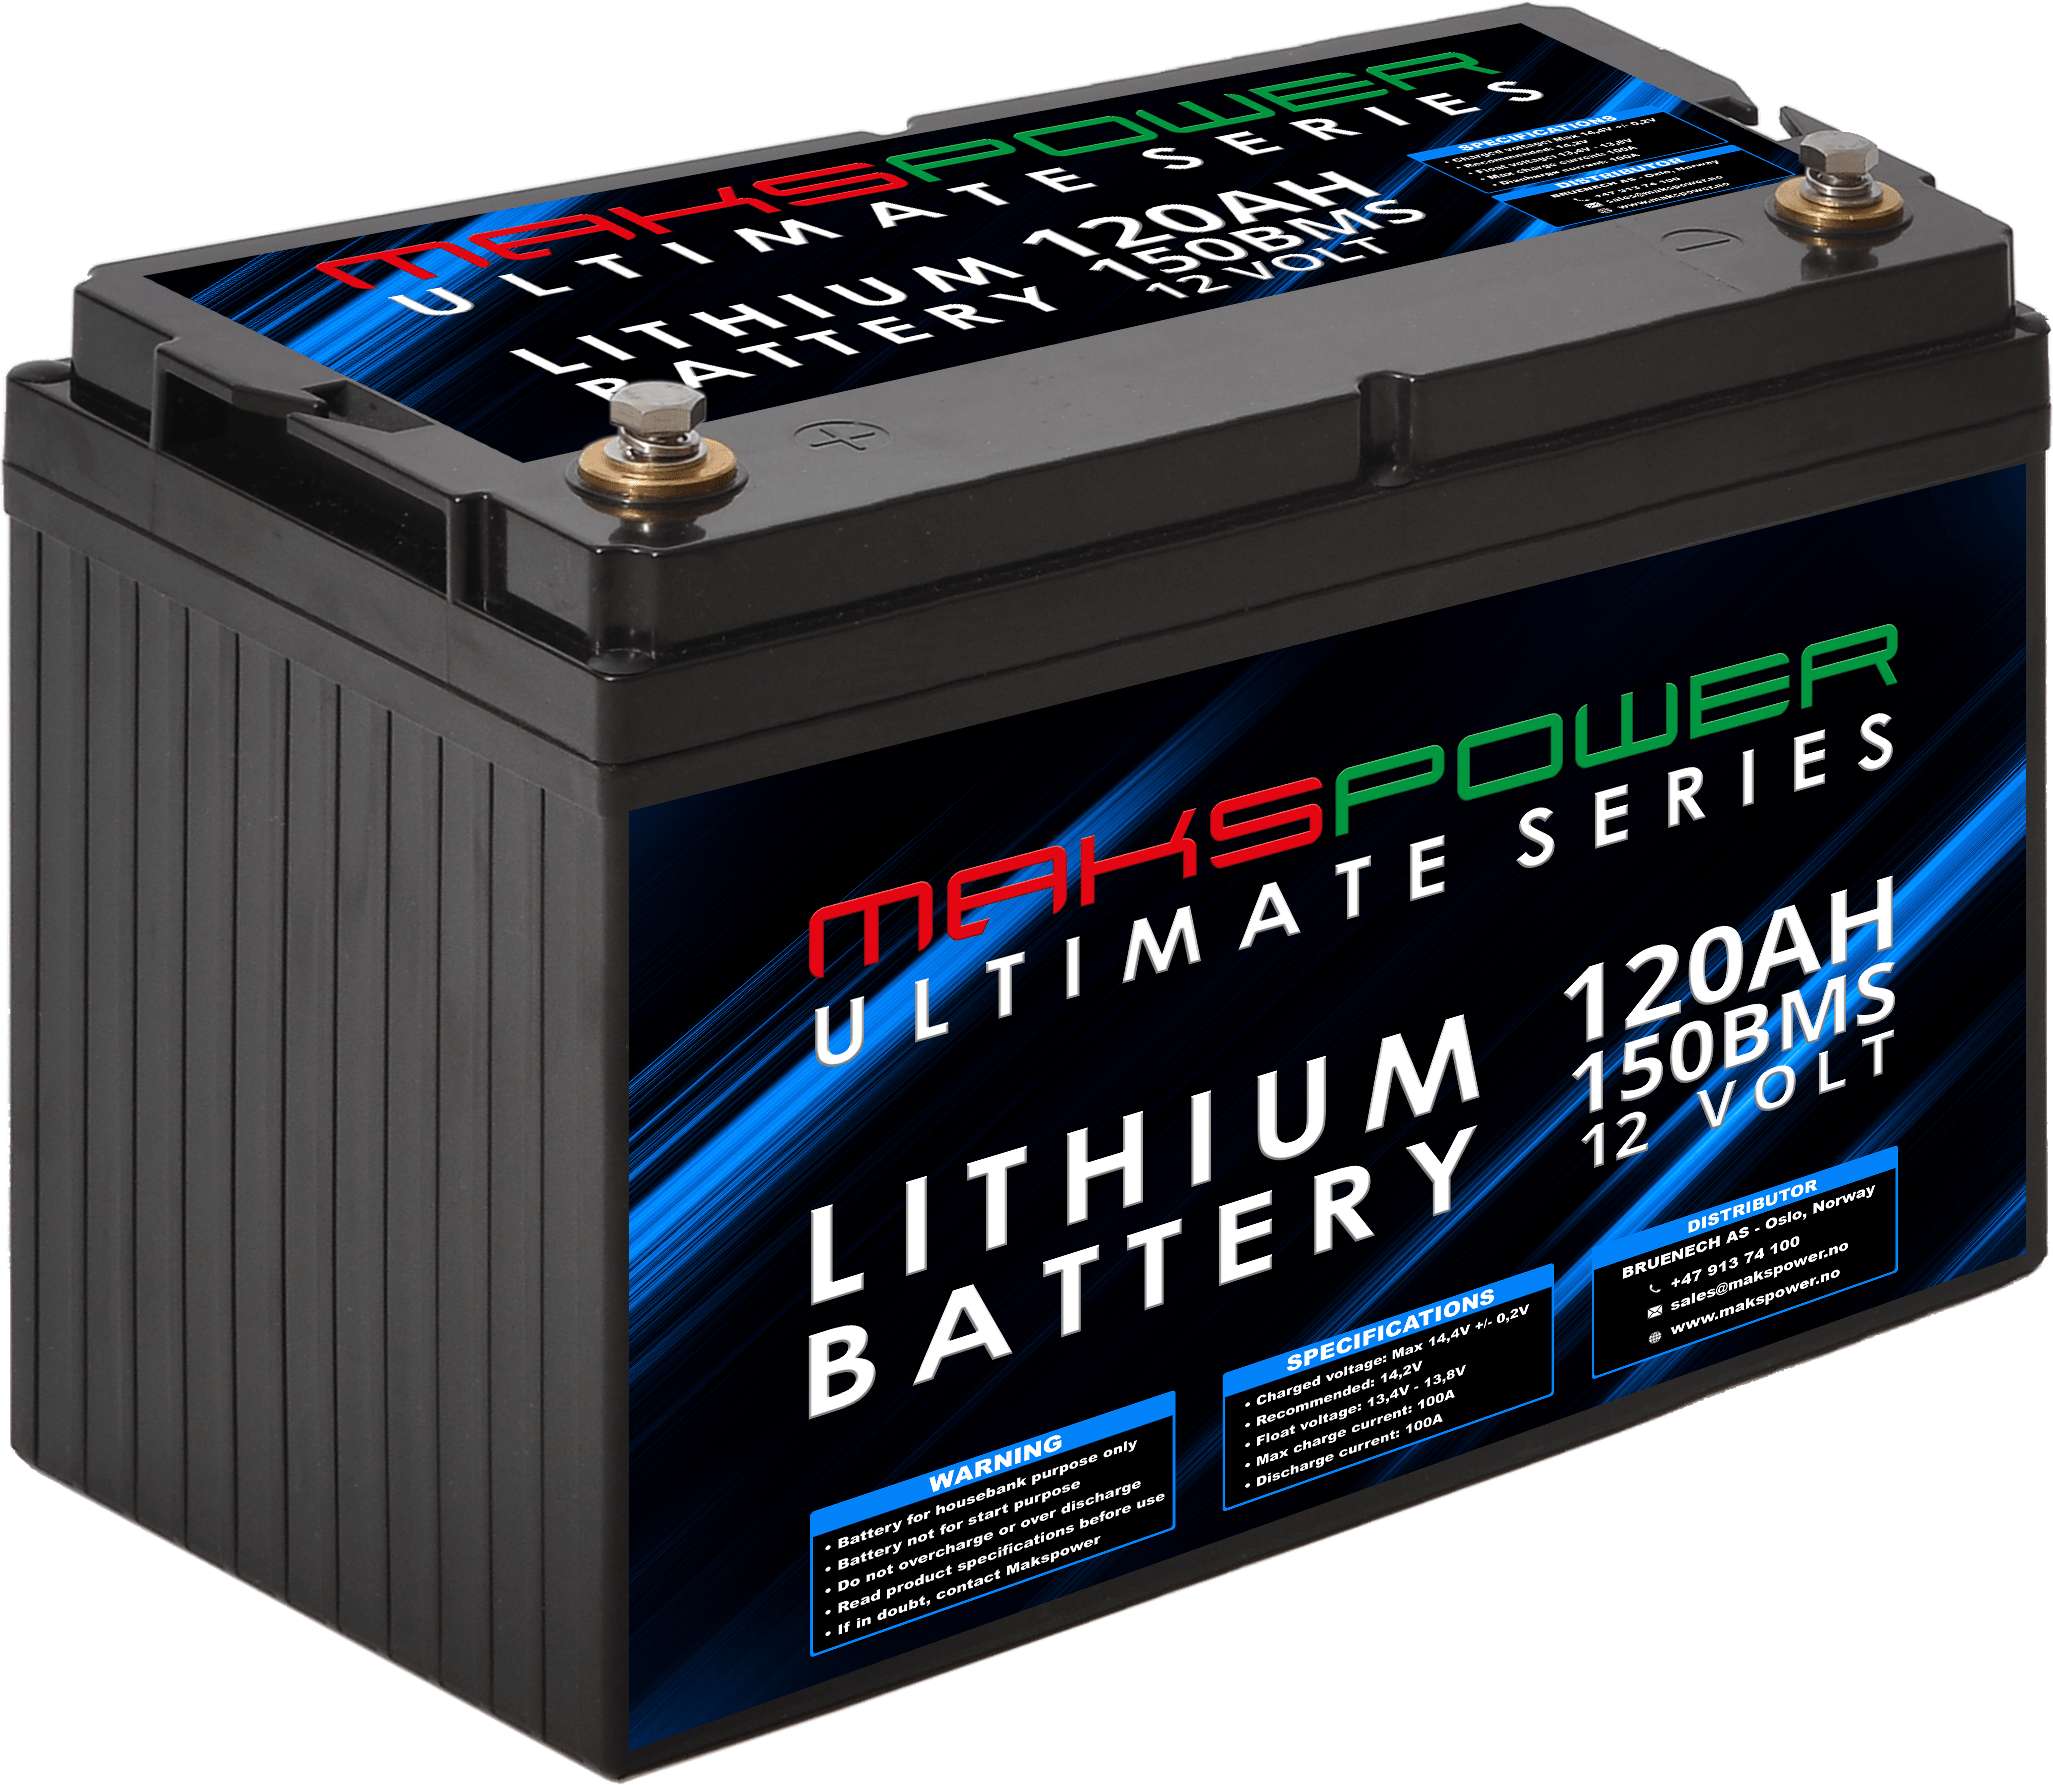 Makspower Ultimate Series 120AH Litium Batteri